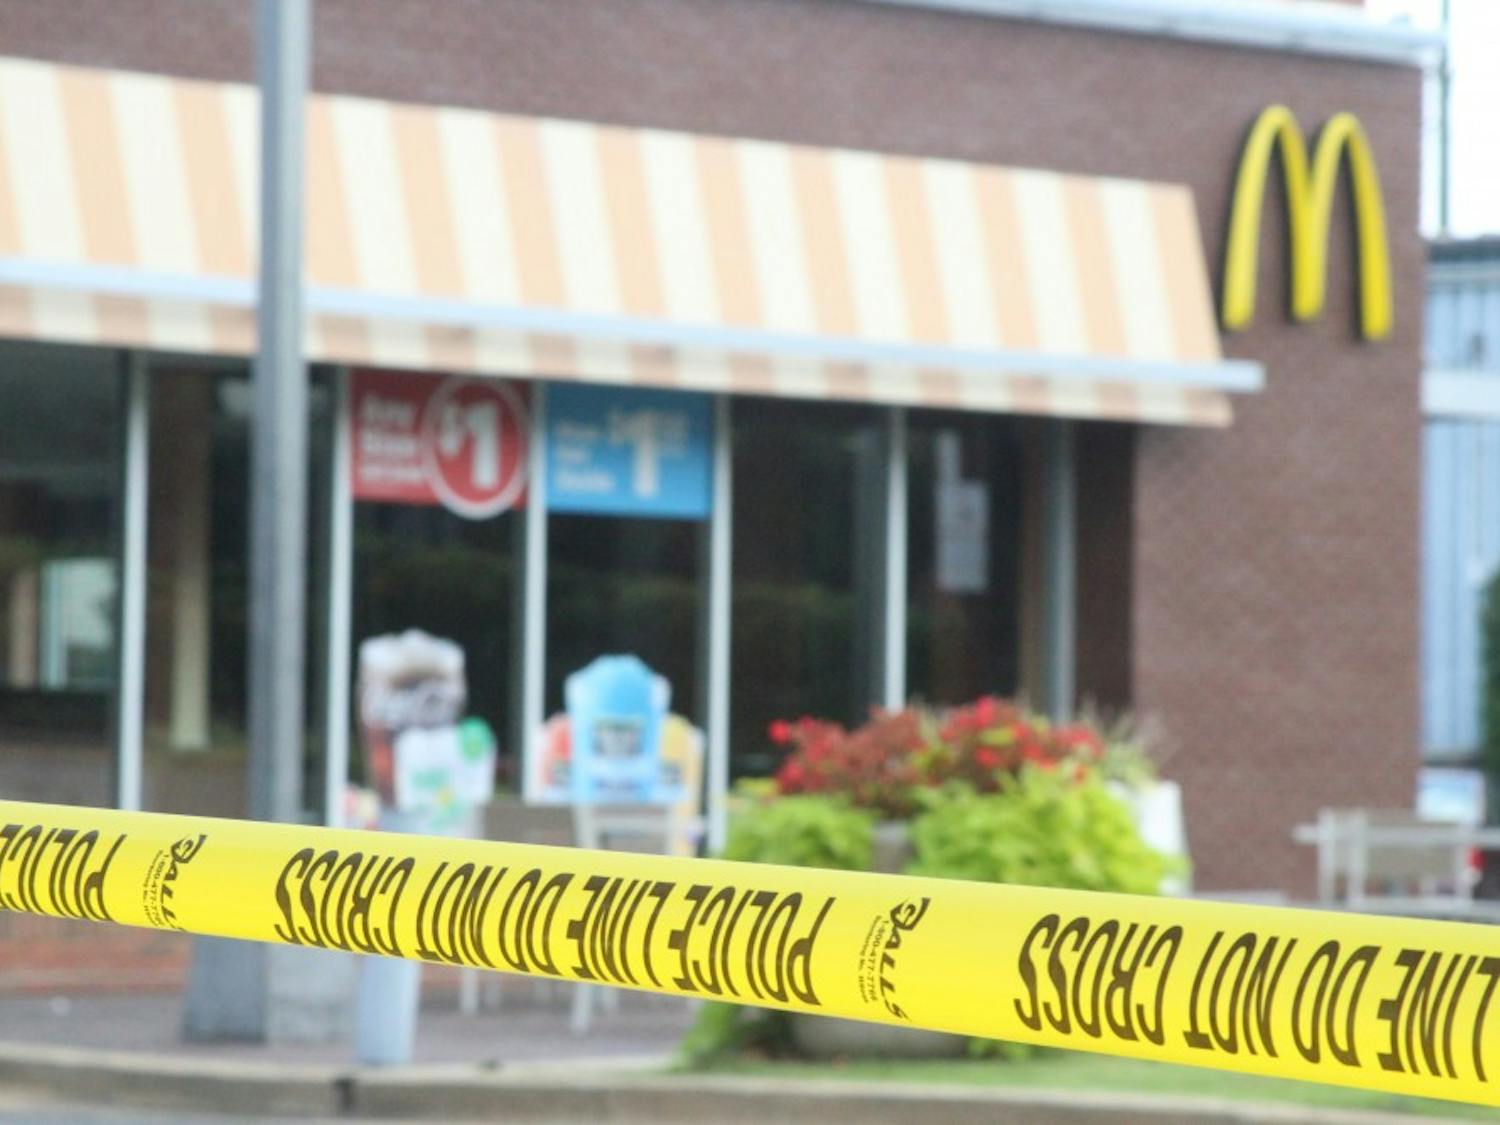 GALLERY: Shooting kills one, injures 4 at McDonald's | 09.09.2018